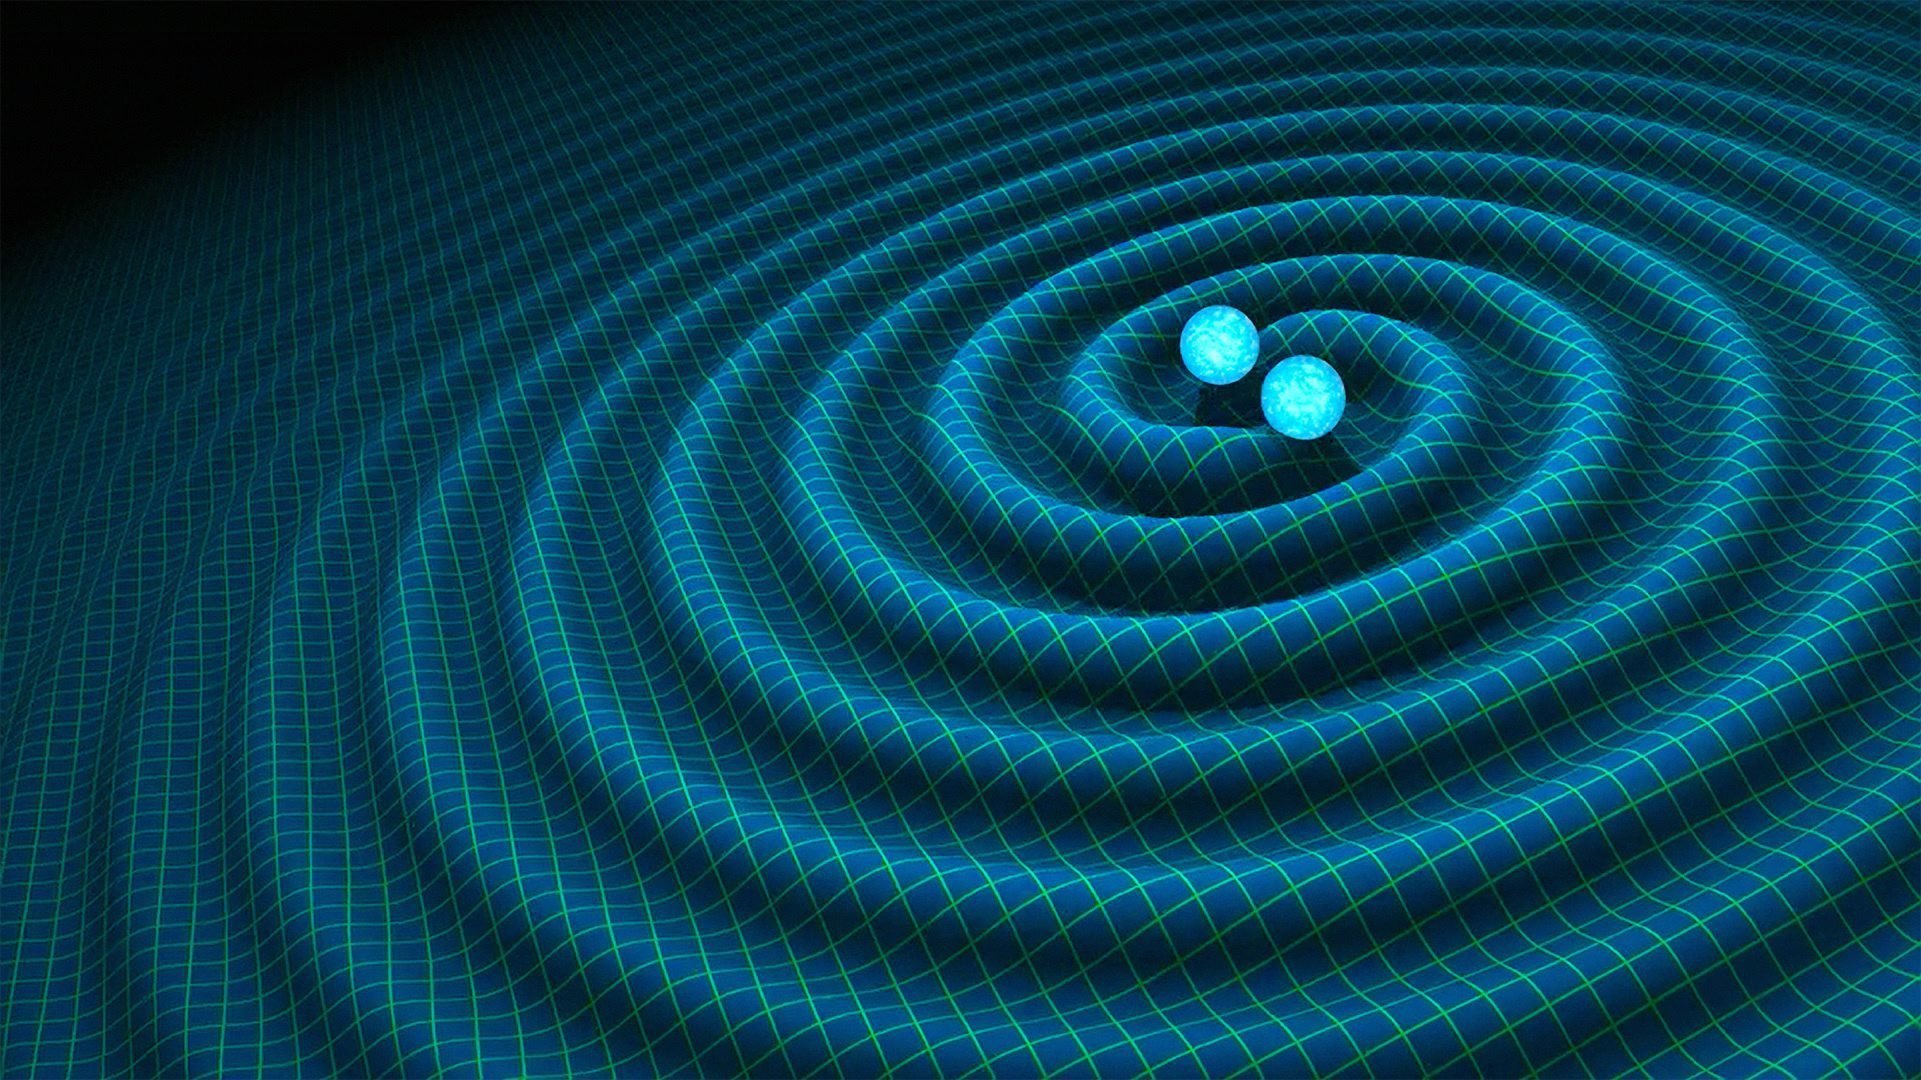 gravitational-waves-generated-by-binary-neutron-stars.jpg